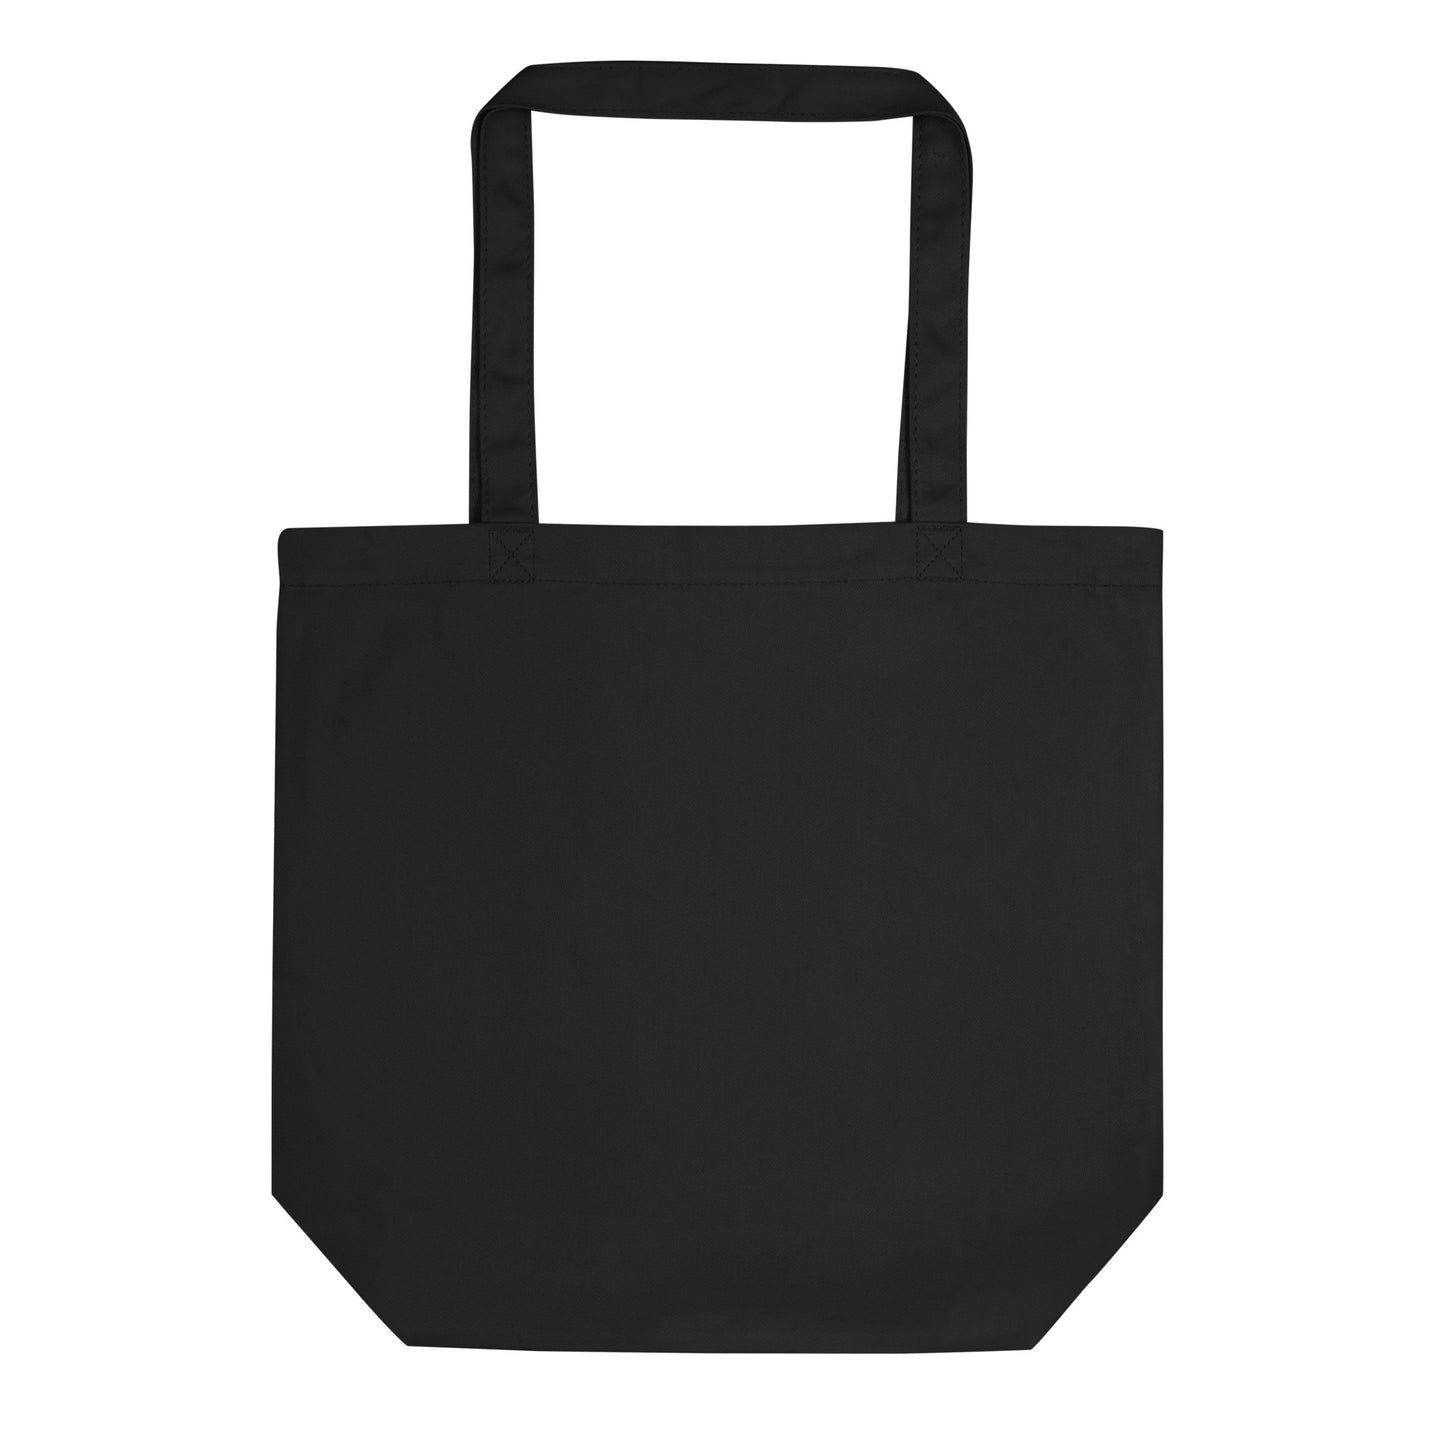 Eco Tote Bag Comp Repeat Black Monotone - CineQuips